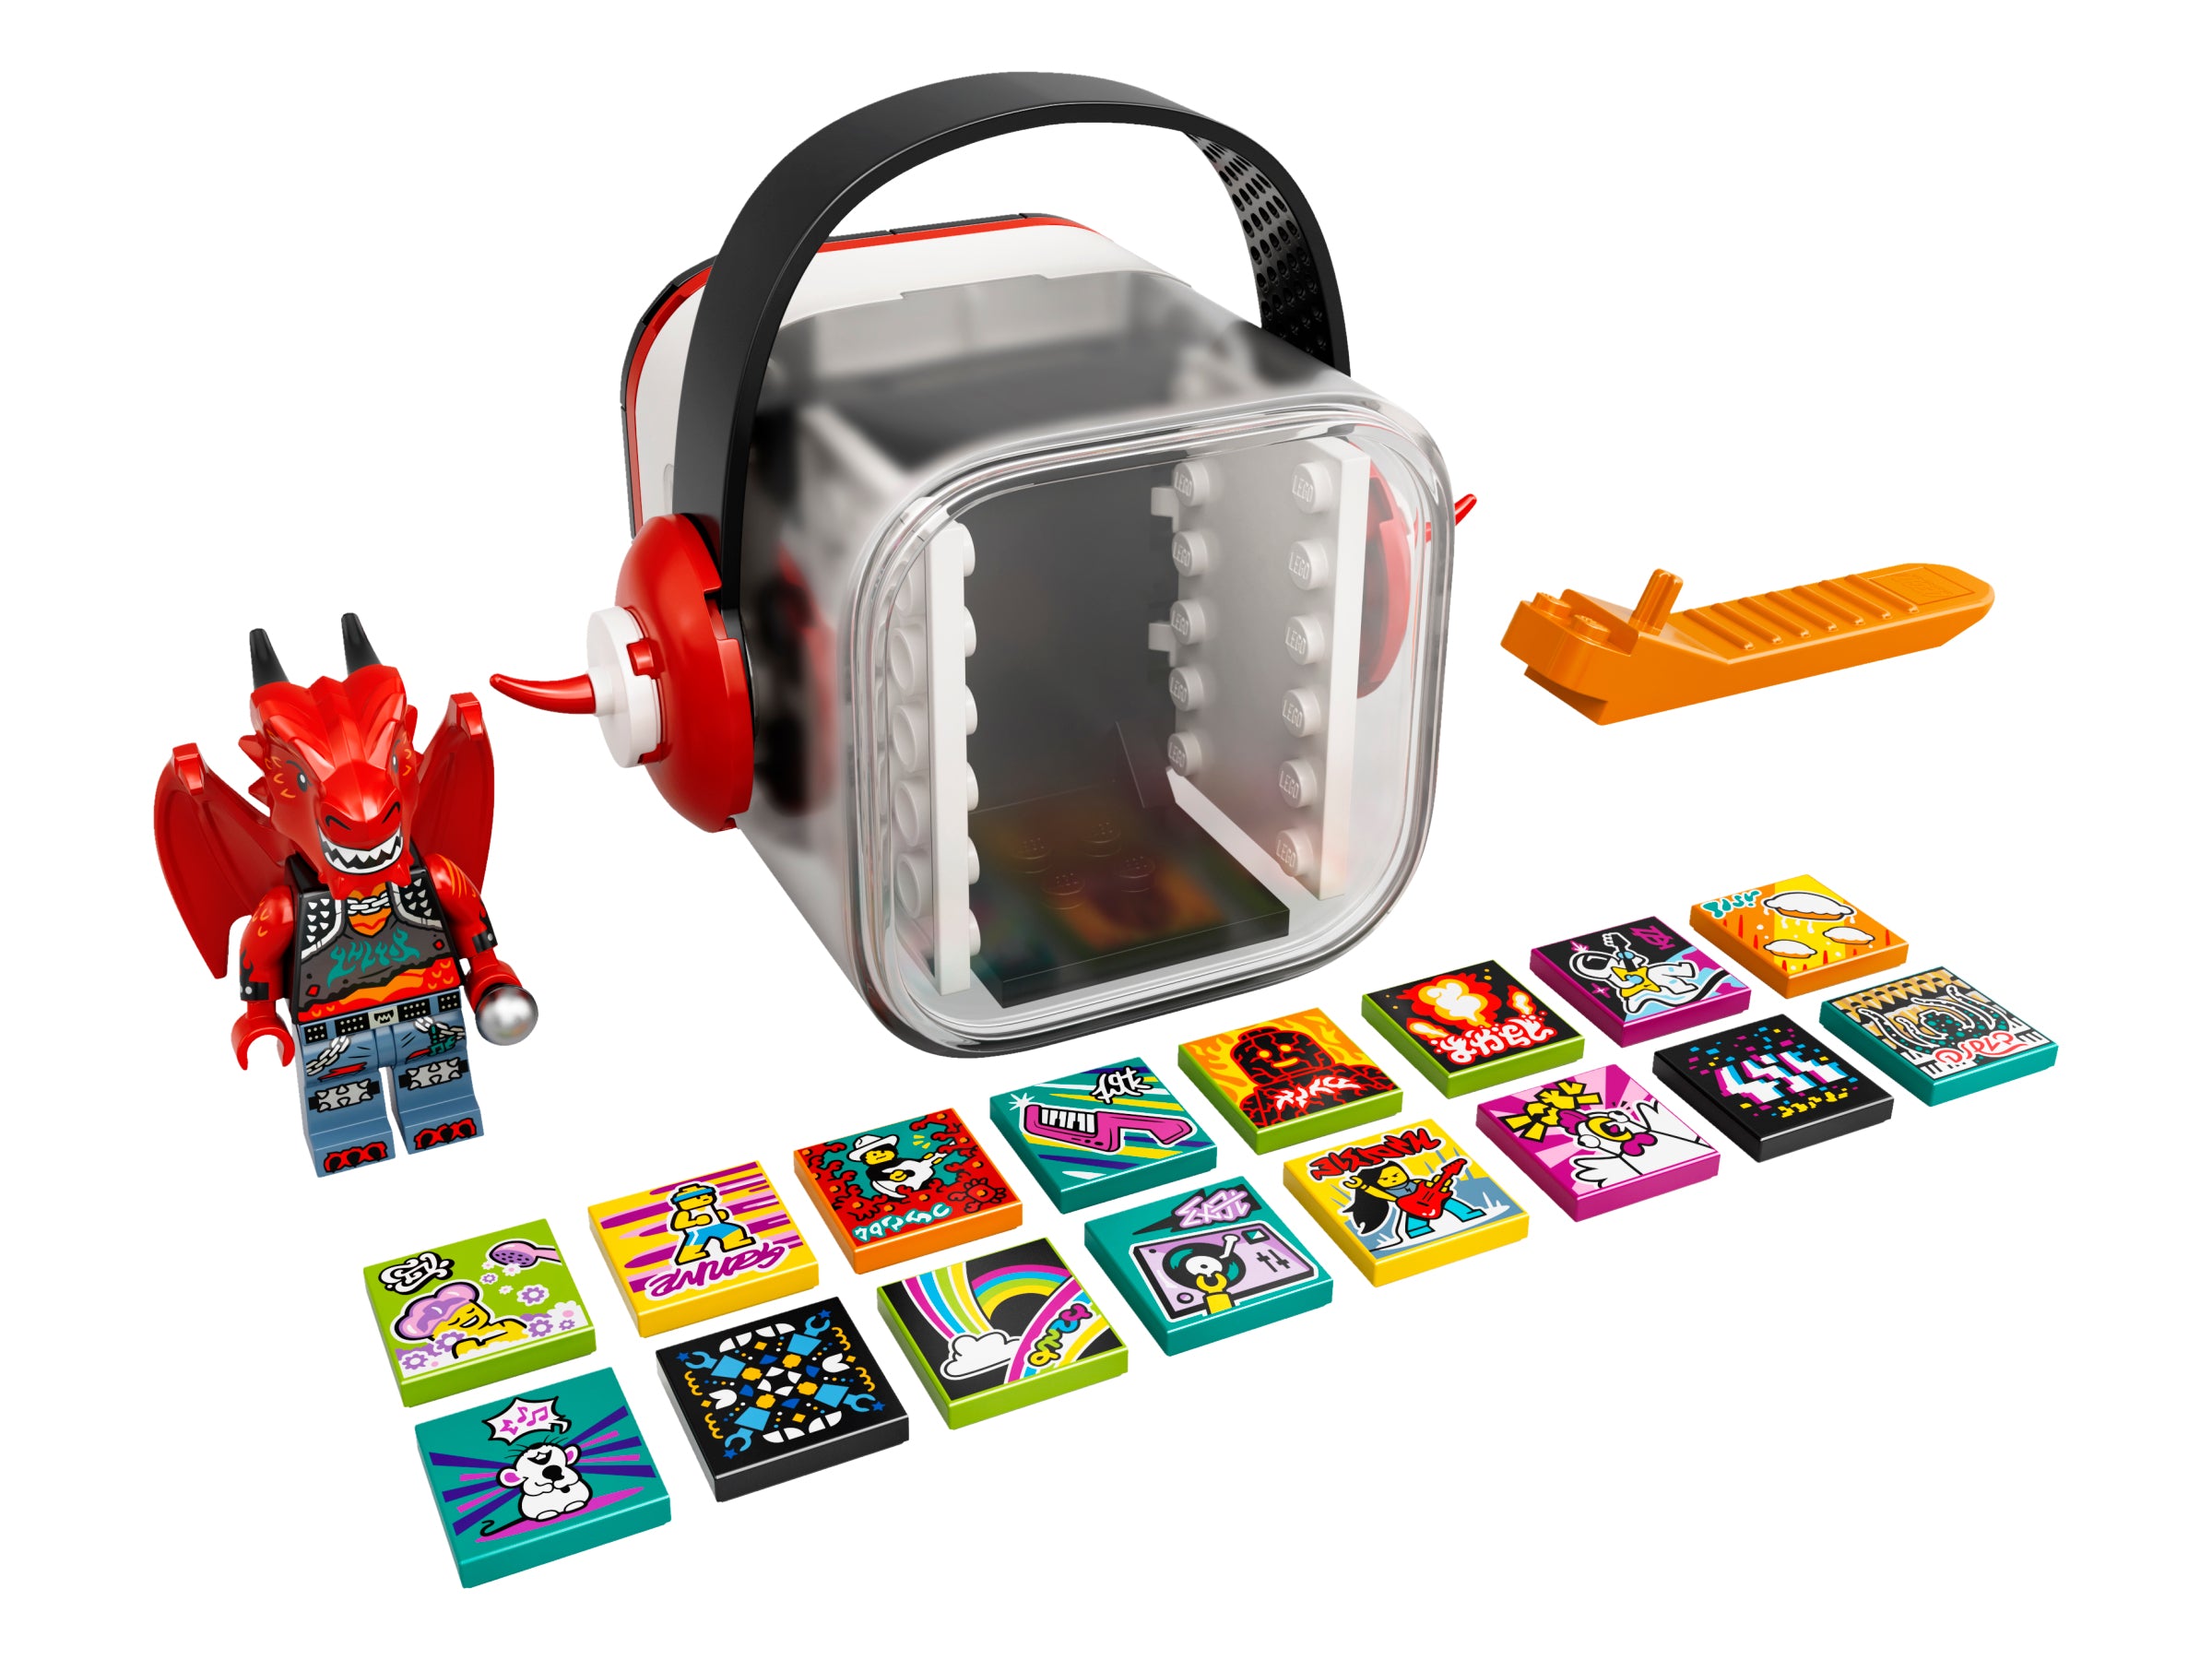 43109 LEGO® Vidiyo - Metal Dragon BeatBox